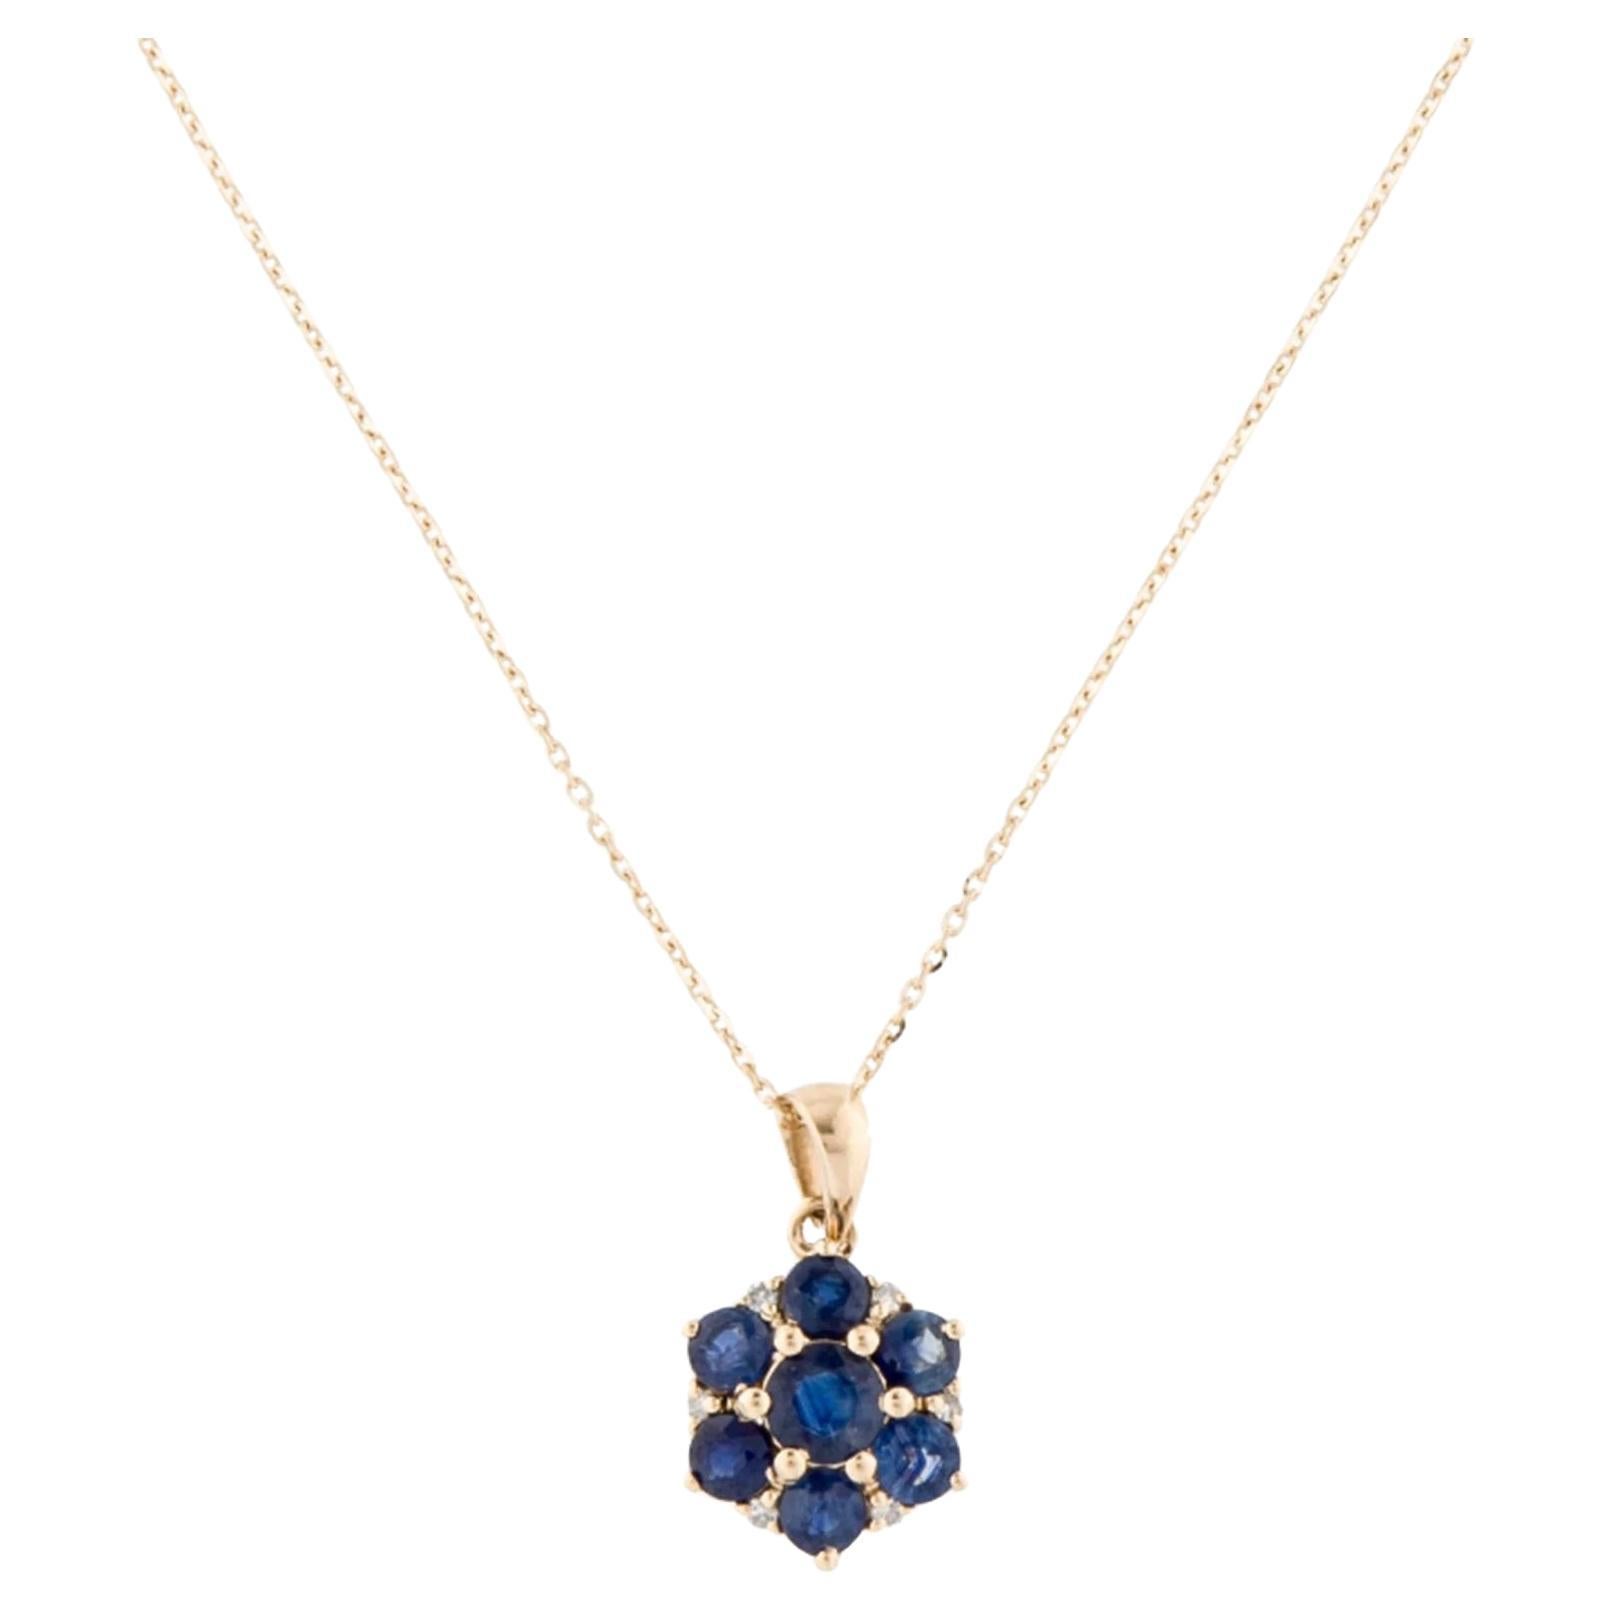 14K Sapphire Flower Pendant Necklace - 1.07 Carat Round Sapphire - 16" Length For Sale